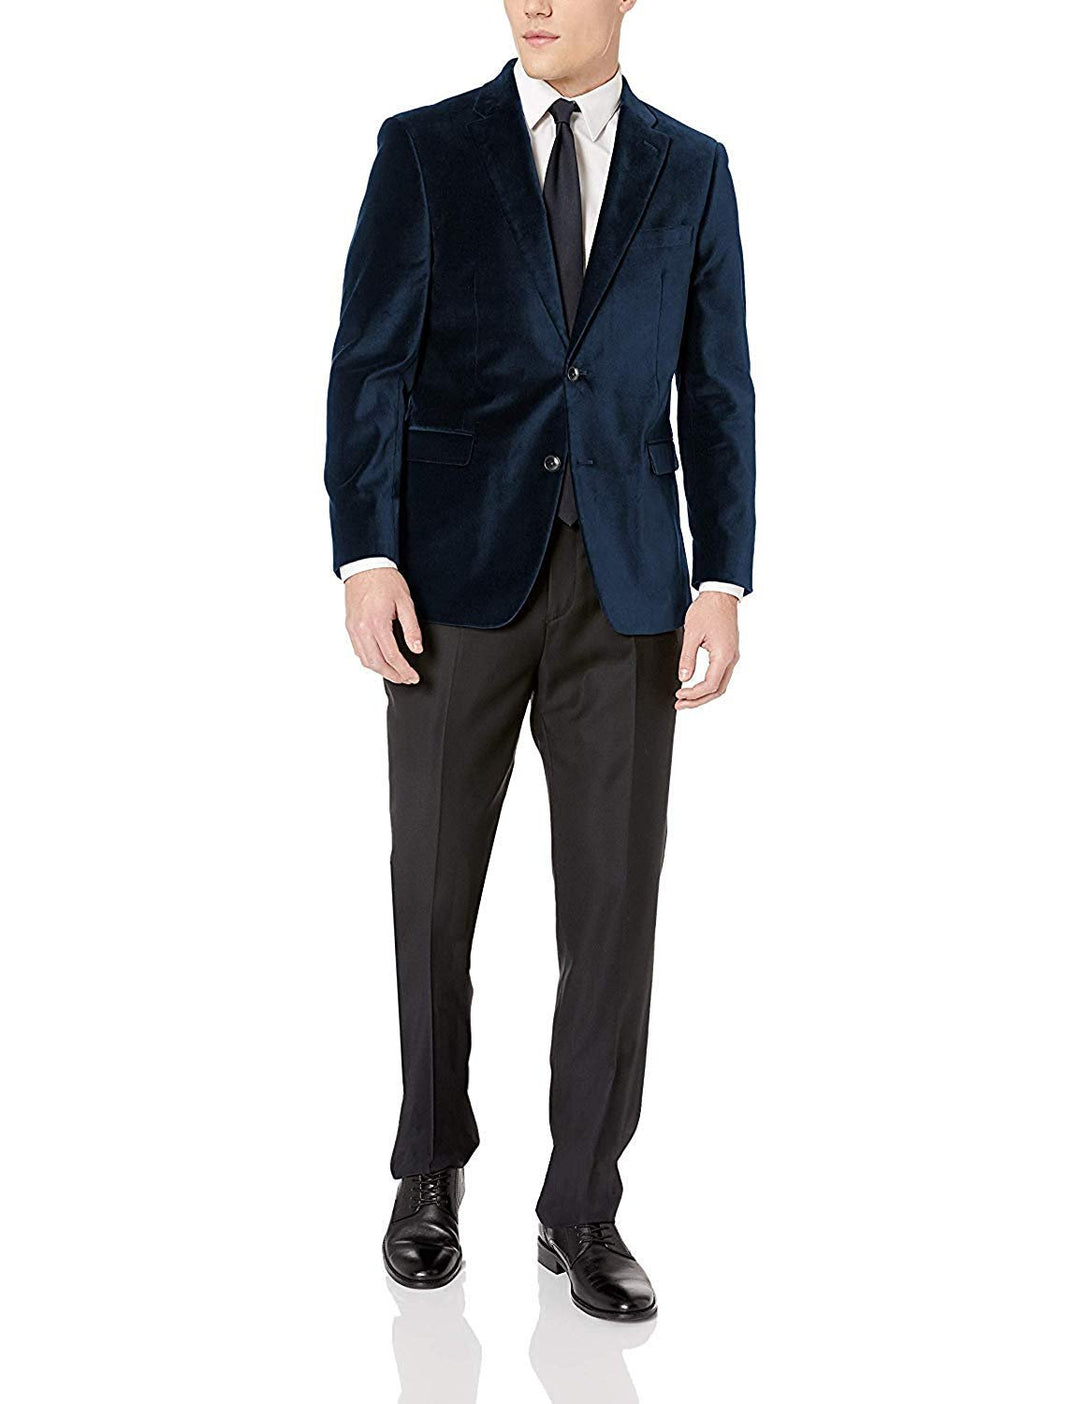 Adam Baker Men's Slim Fit Velvet Sport Coats - Many Styles & Colors - CLEARANCE - FINAL SALE